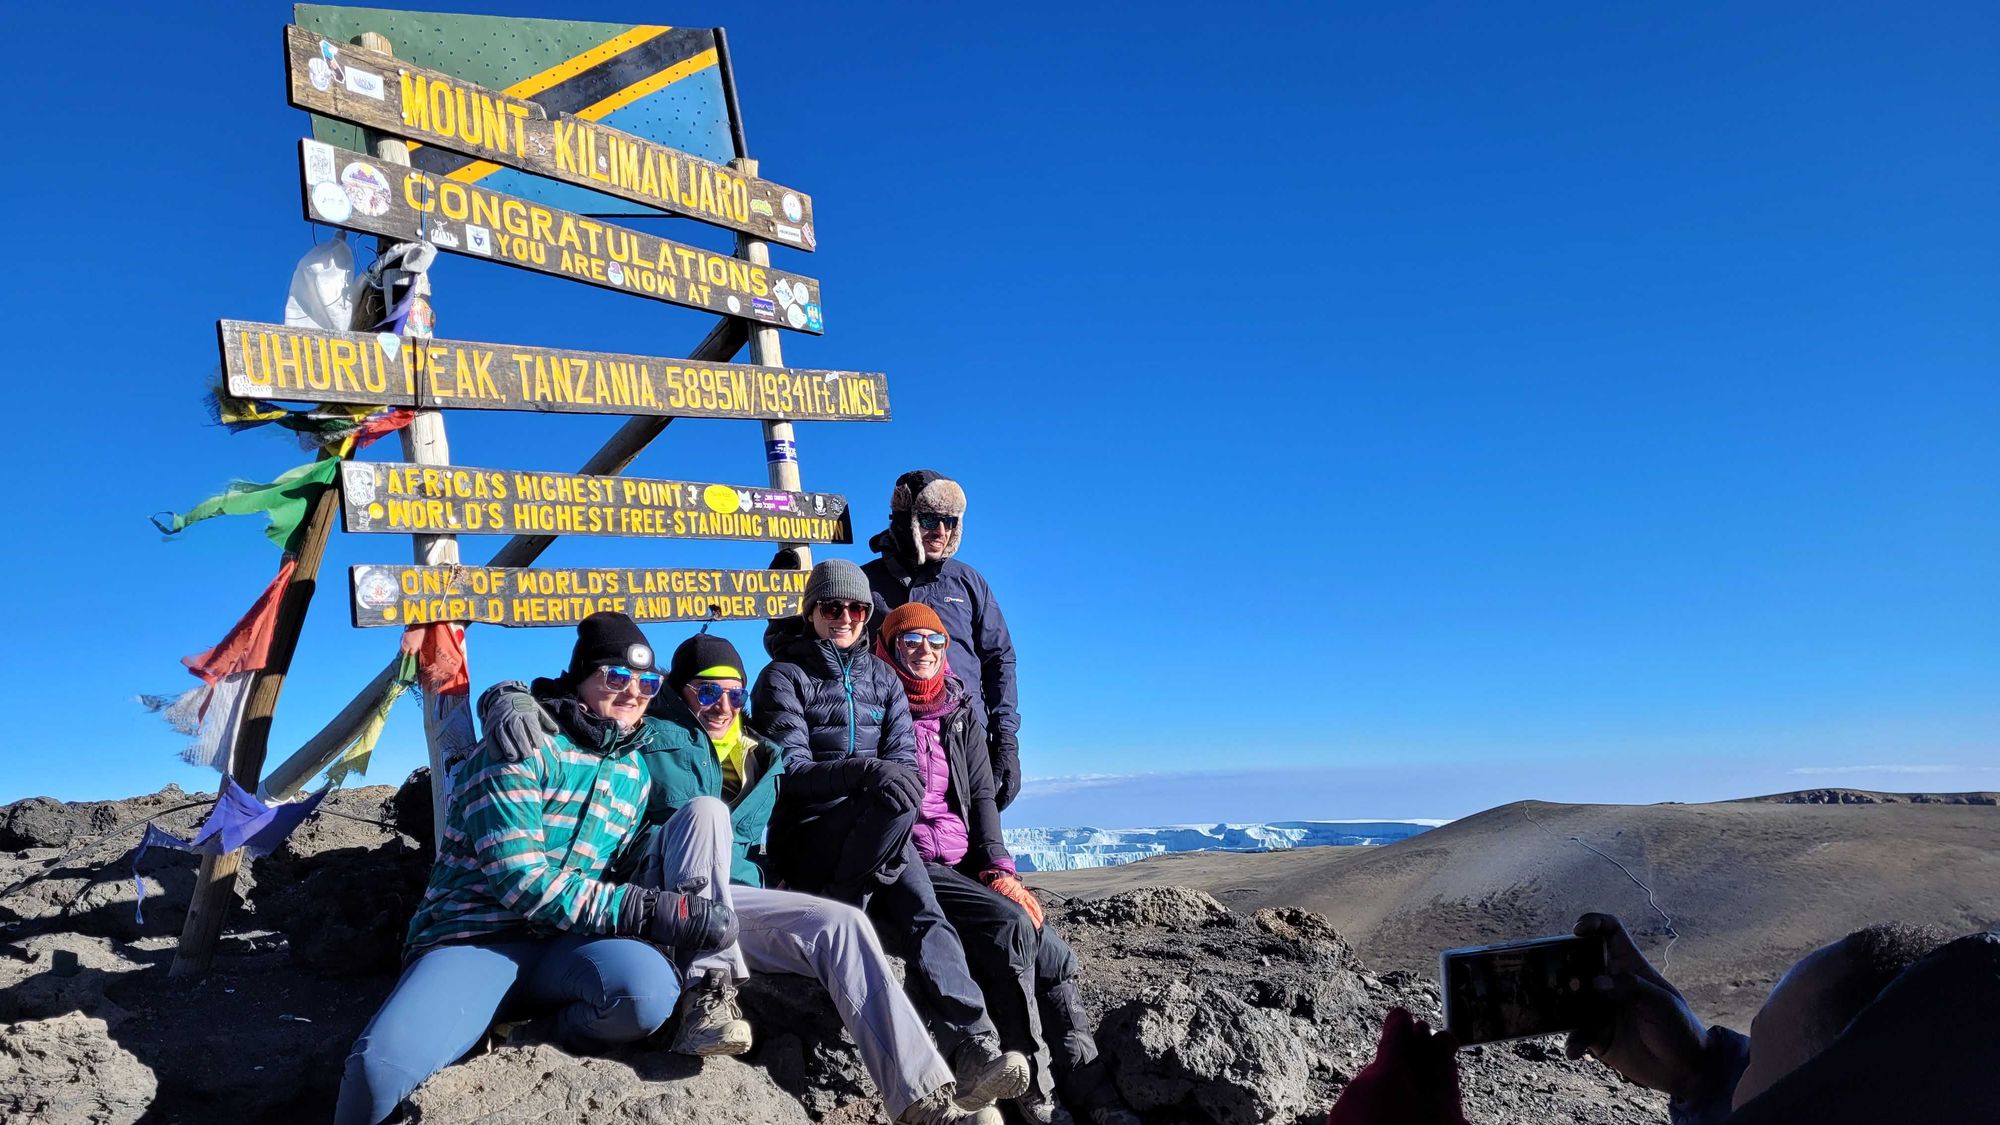 Five trekkers posing for a photo at the Uhuru Peak sign on the summit of Mount Kilimanjaro, Tanzania.